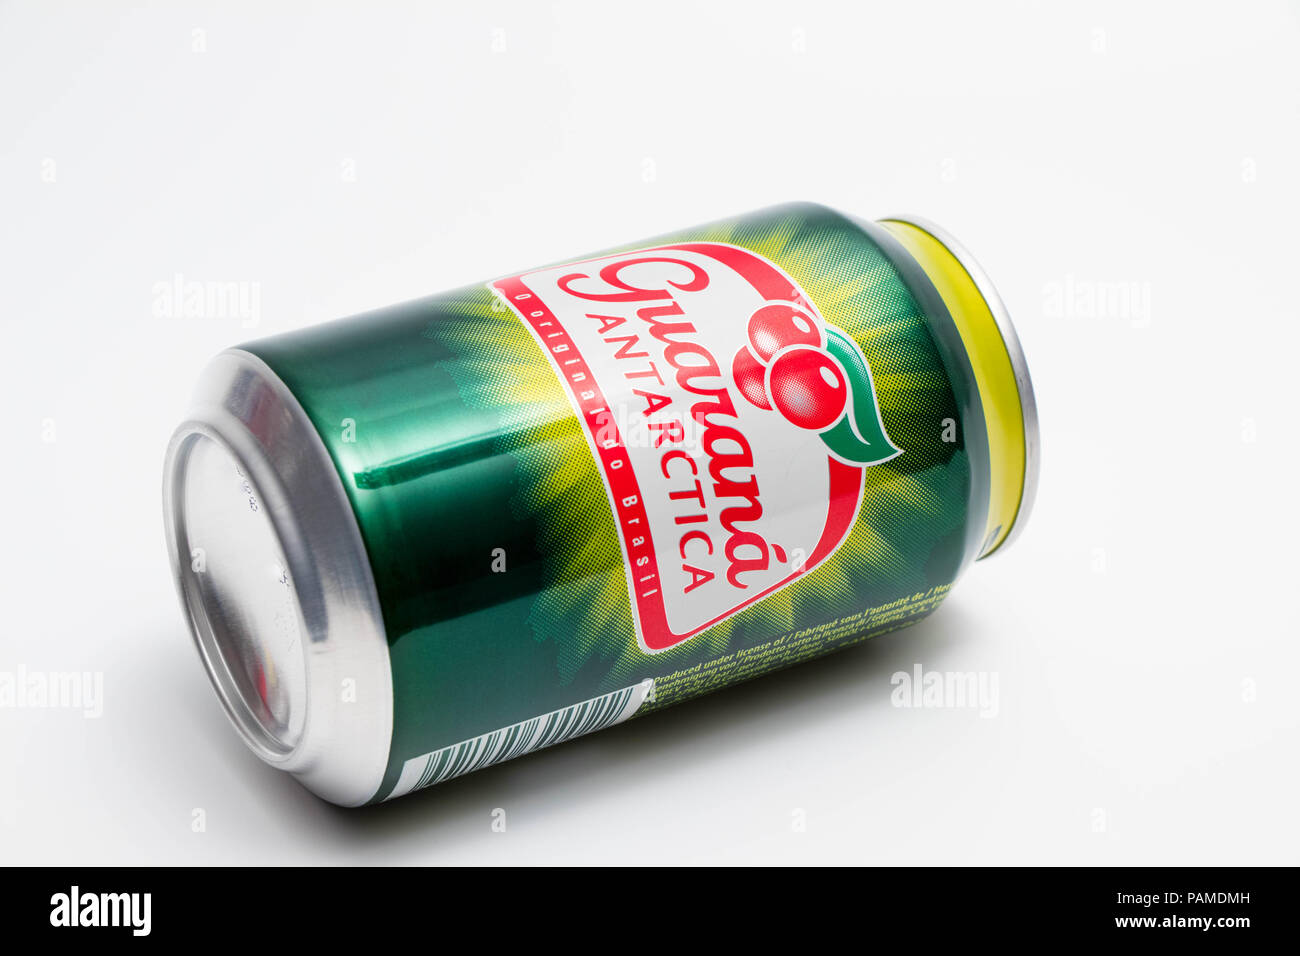 Can of energy drink guarana antarctica Stock Photo - Alamy